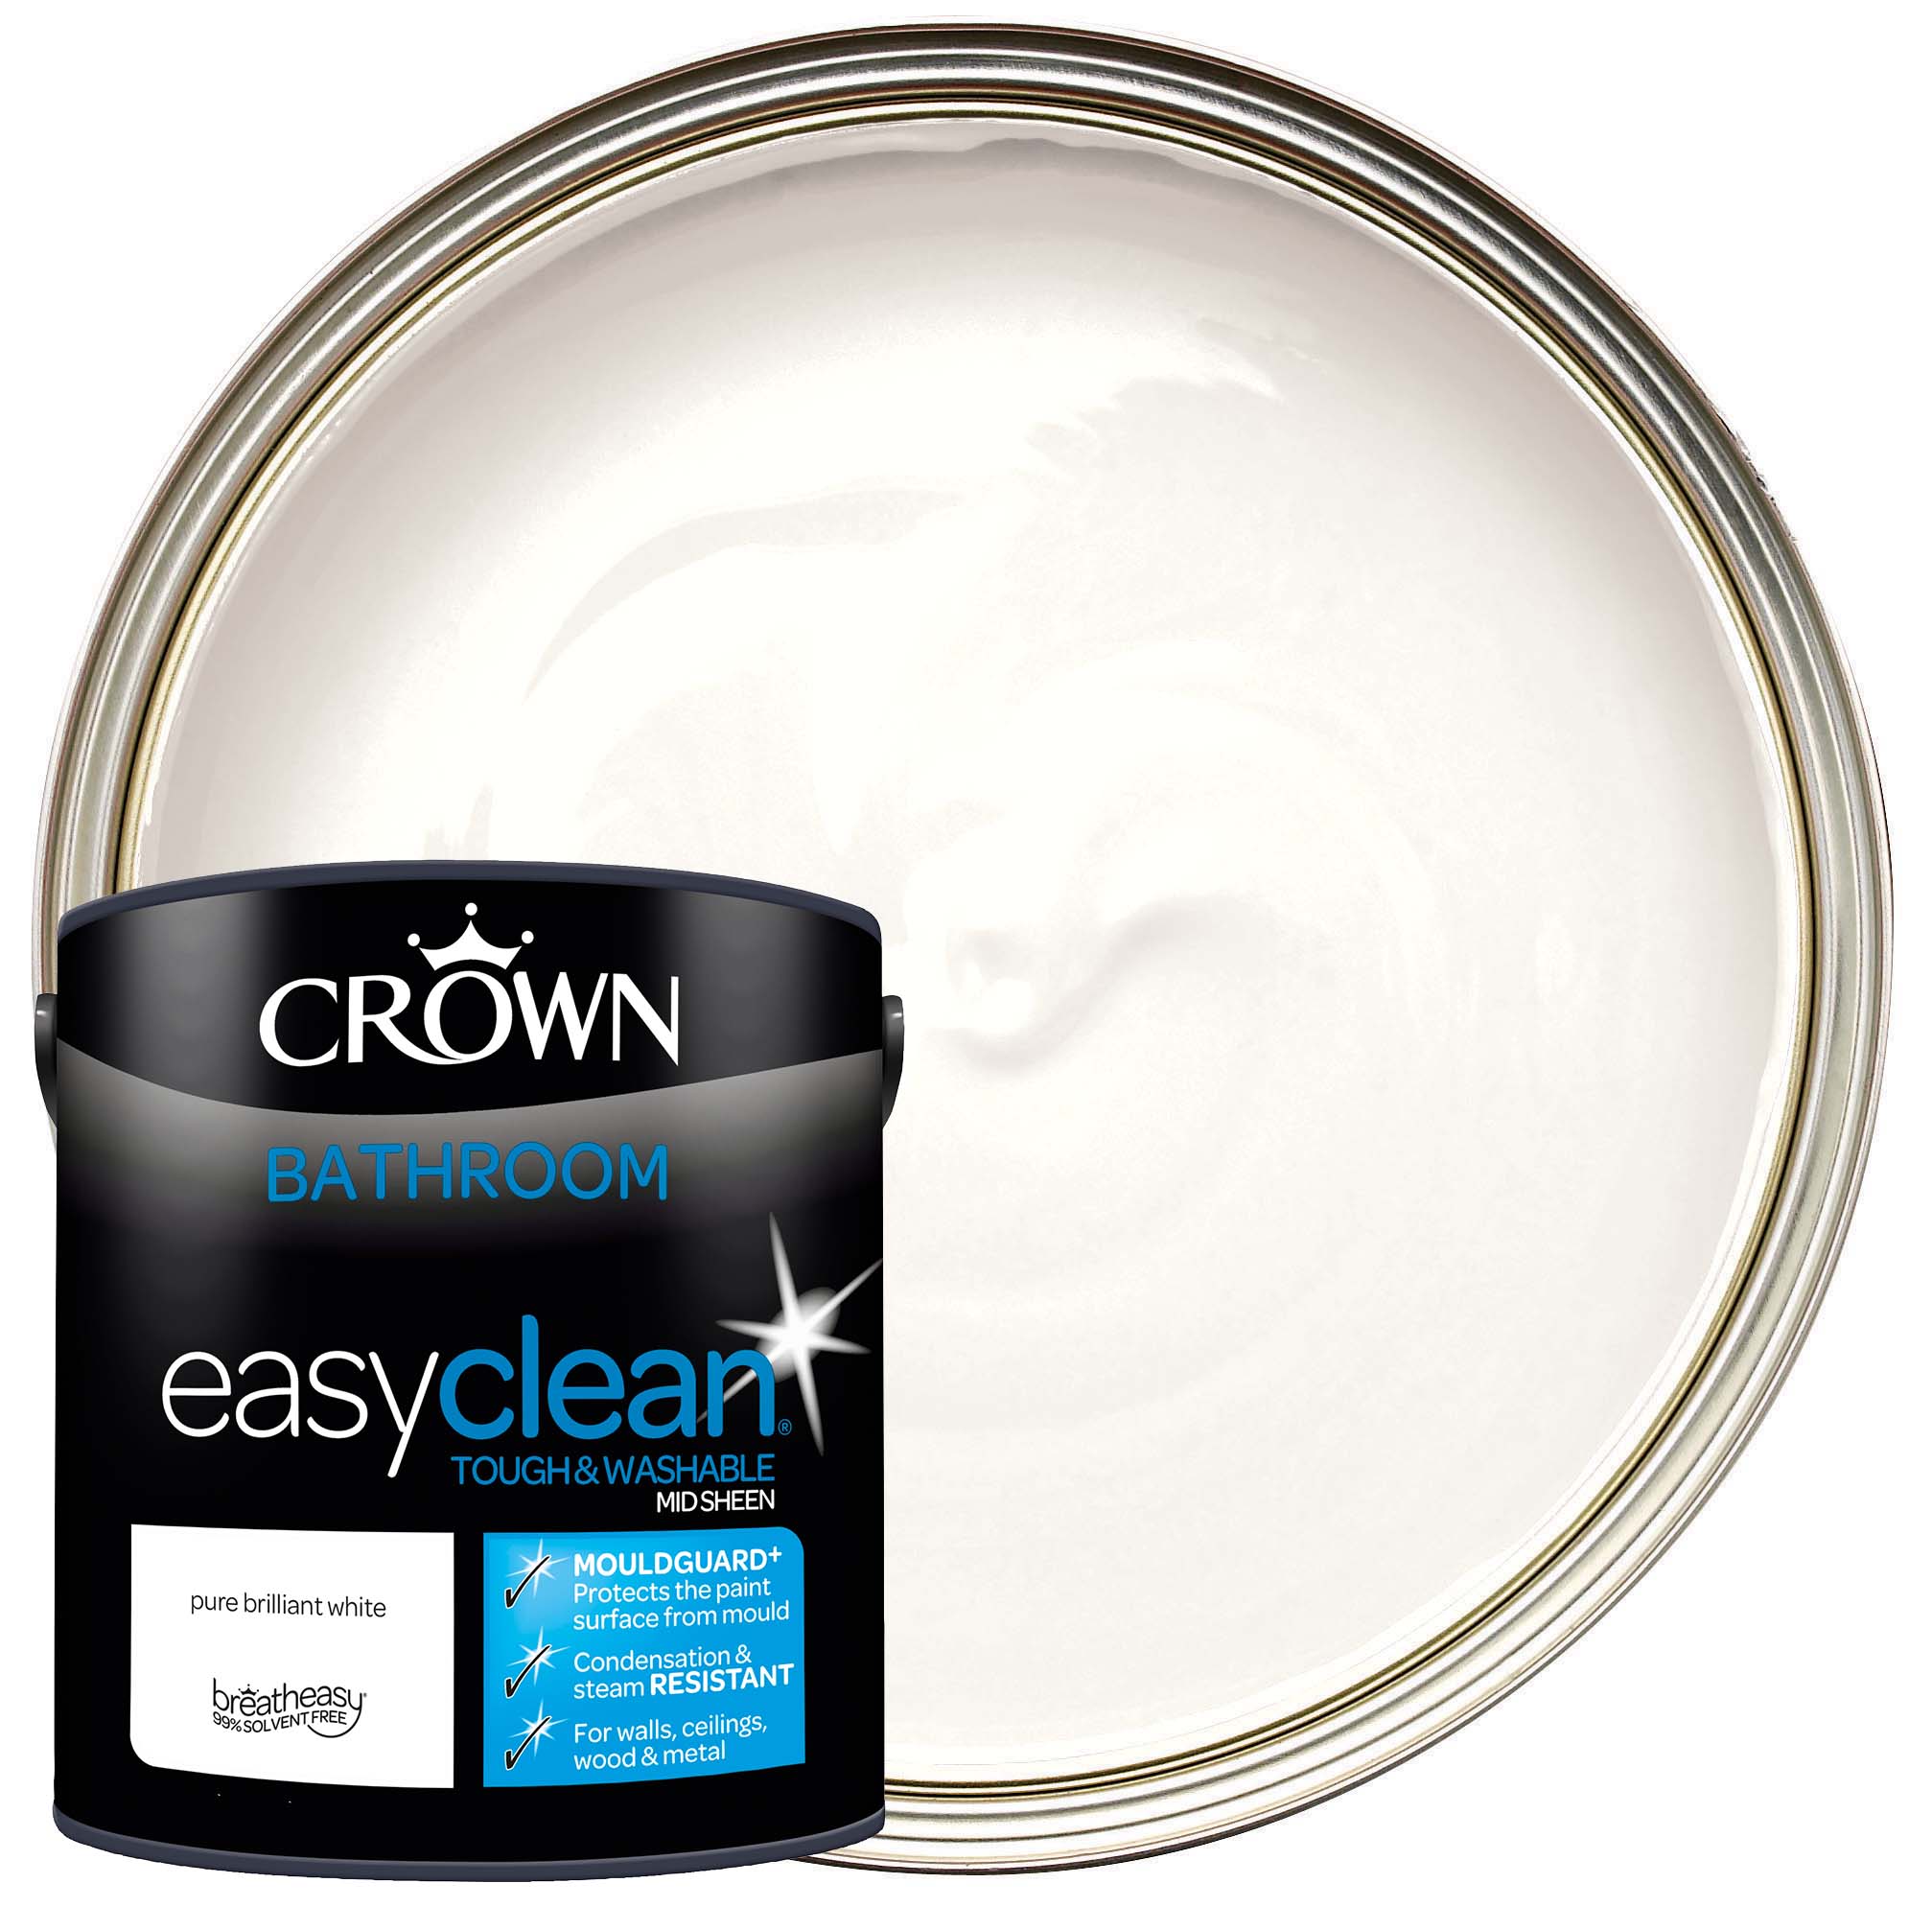 Crown Easyclean Mid Sheen Emulsion Bathroom Paint - Brilliant White - 2.5L